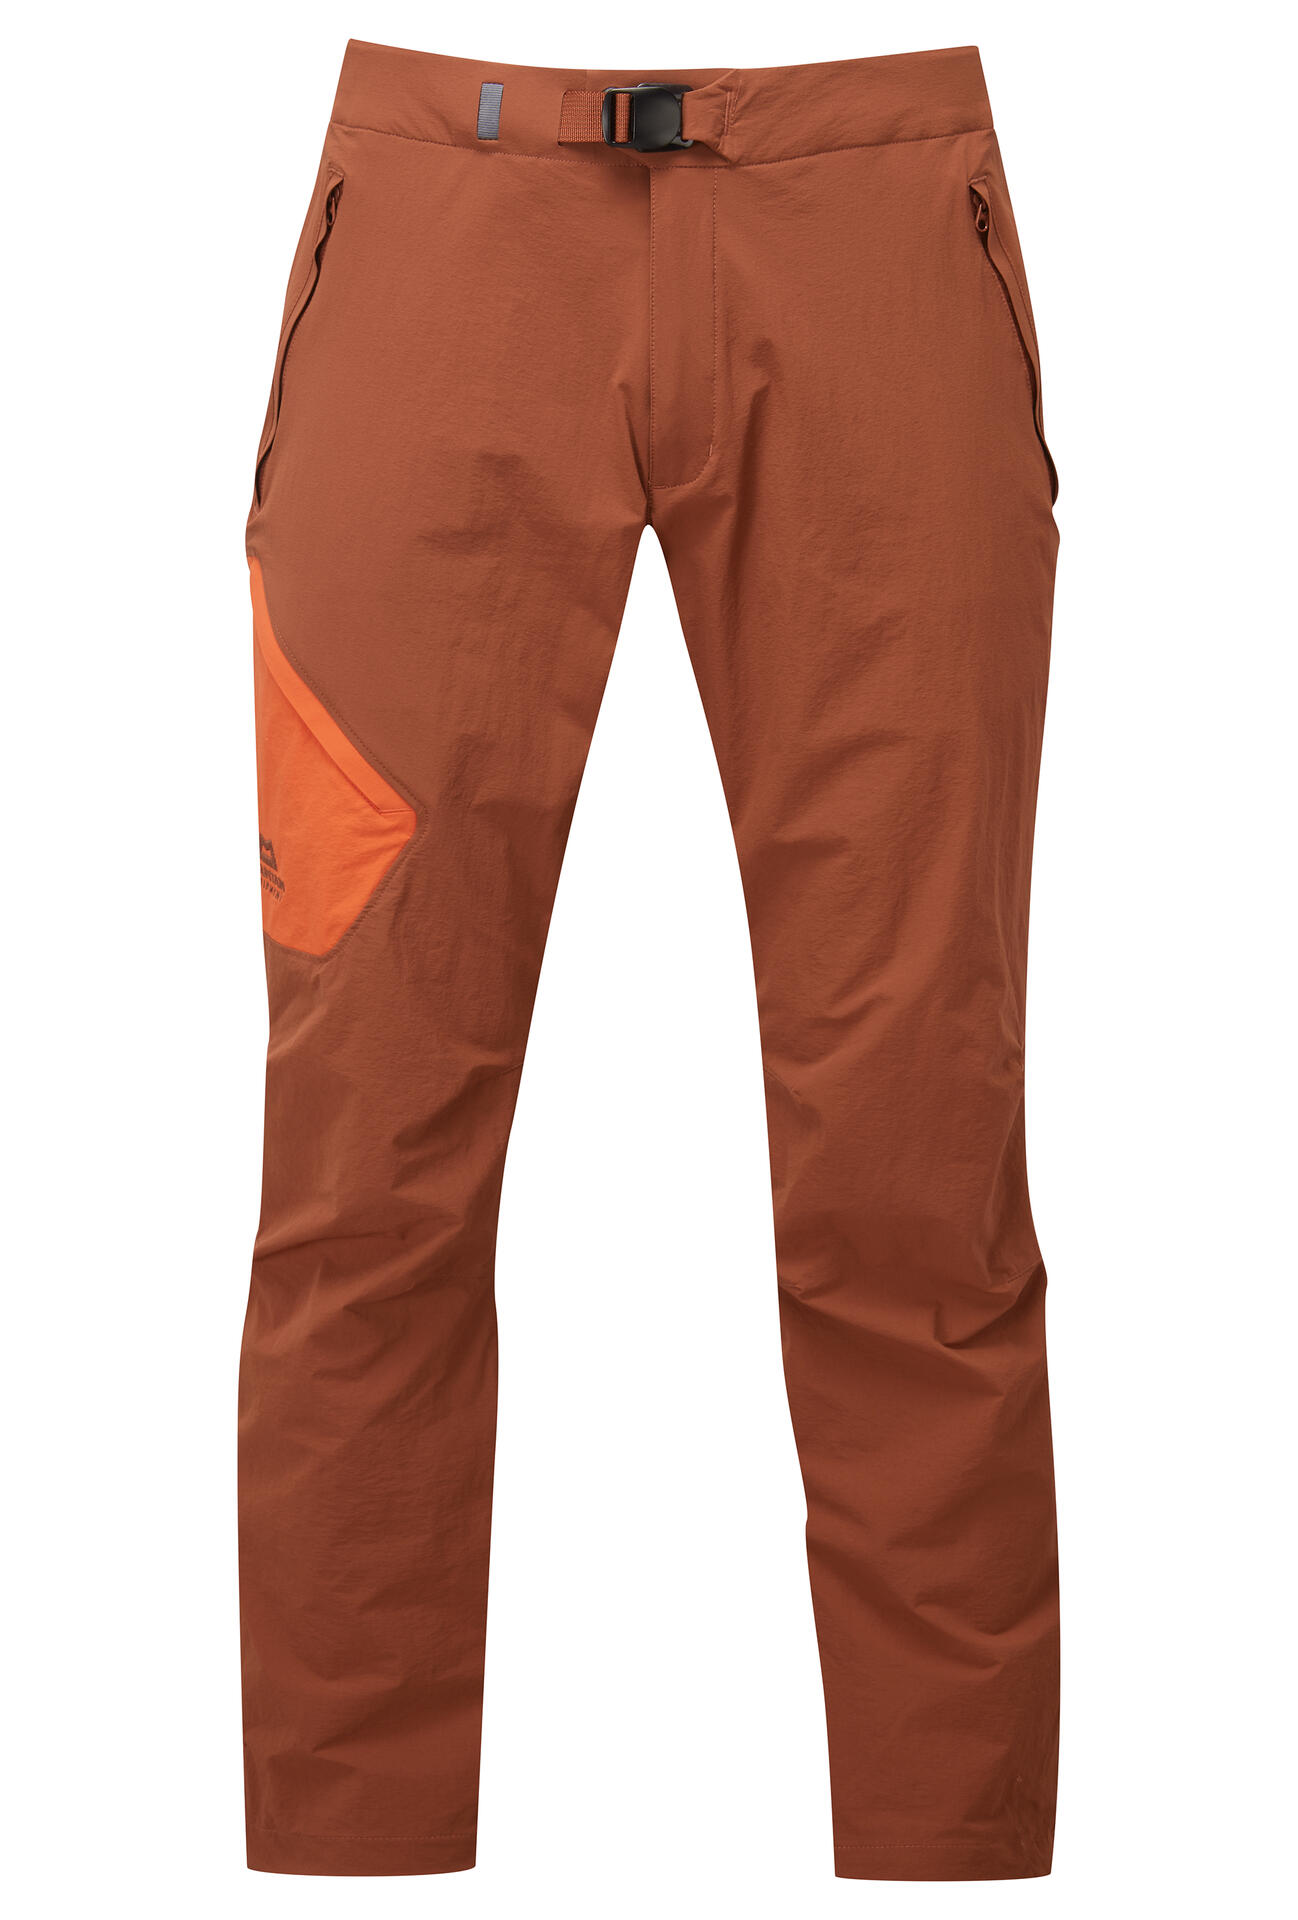 Mountain Equipment Comici Pant (Ac) Men'S - běžná délka Barva: Burnt Henna/Cardinal Orange, Velikost: XXL